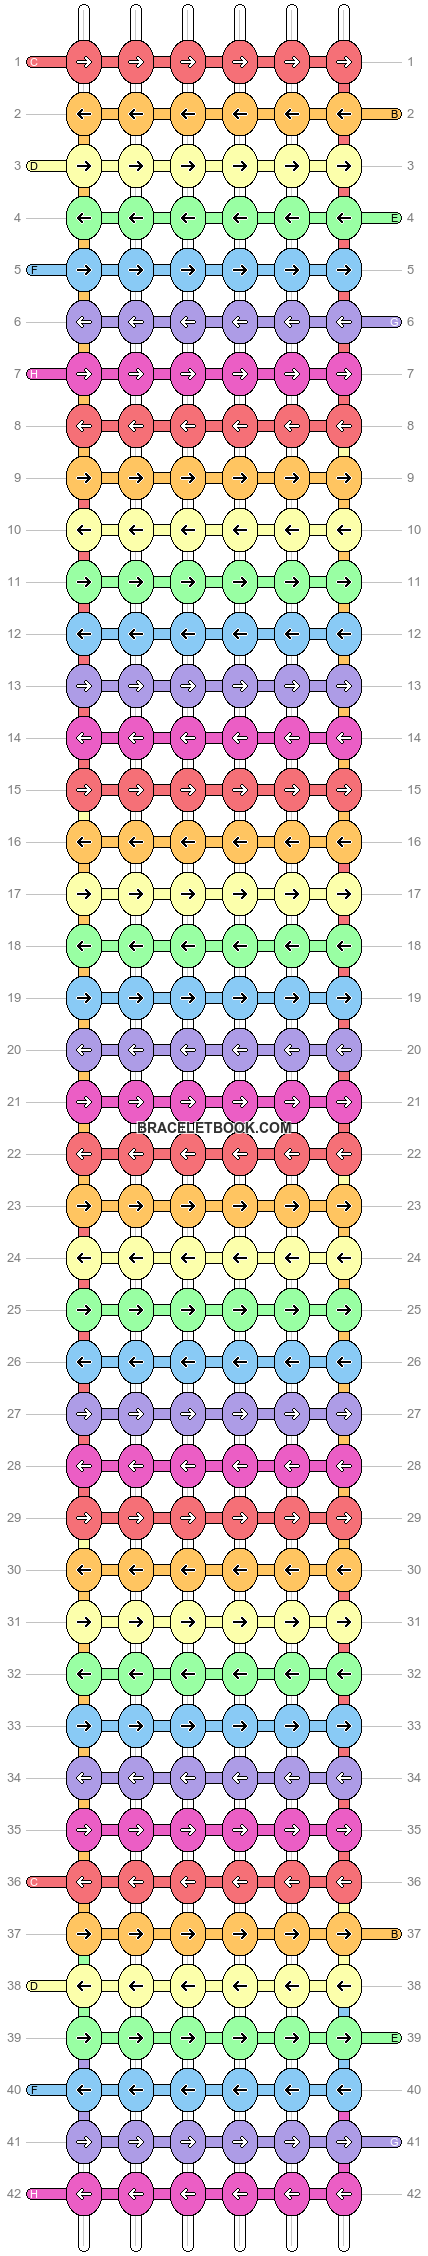 Alpha pattern #12398 variation #42276 pattern